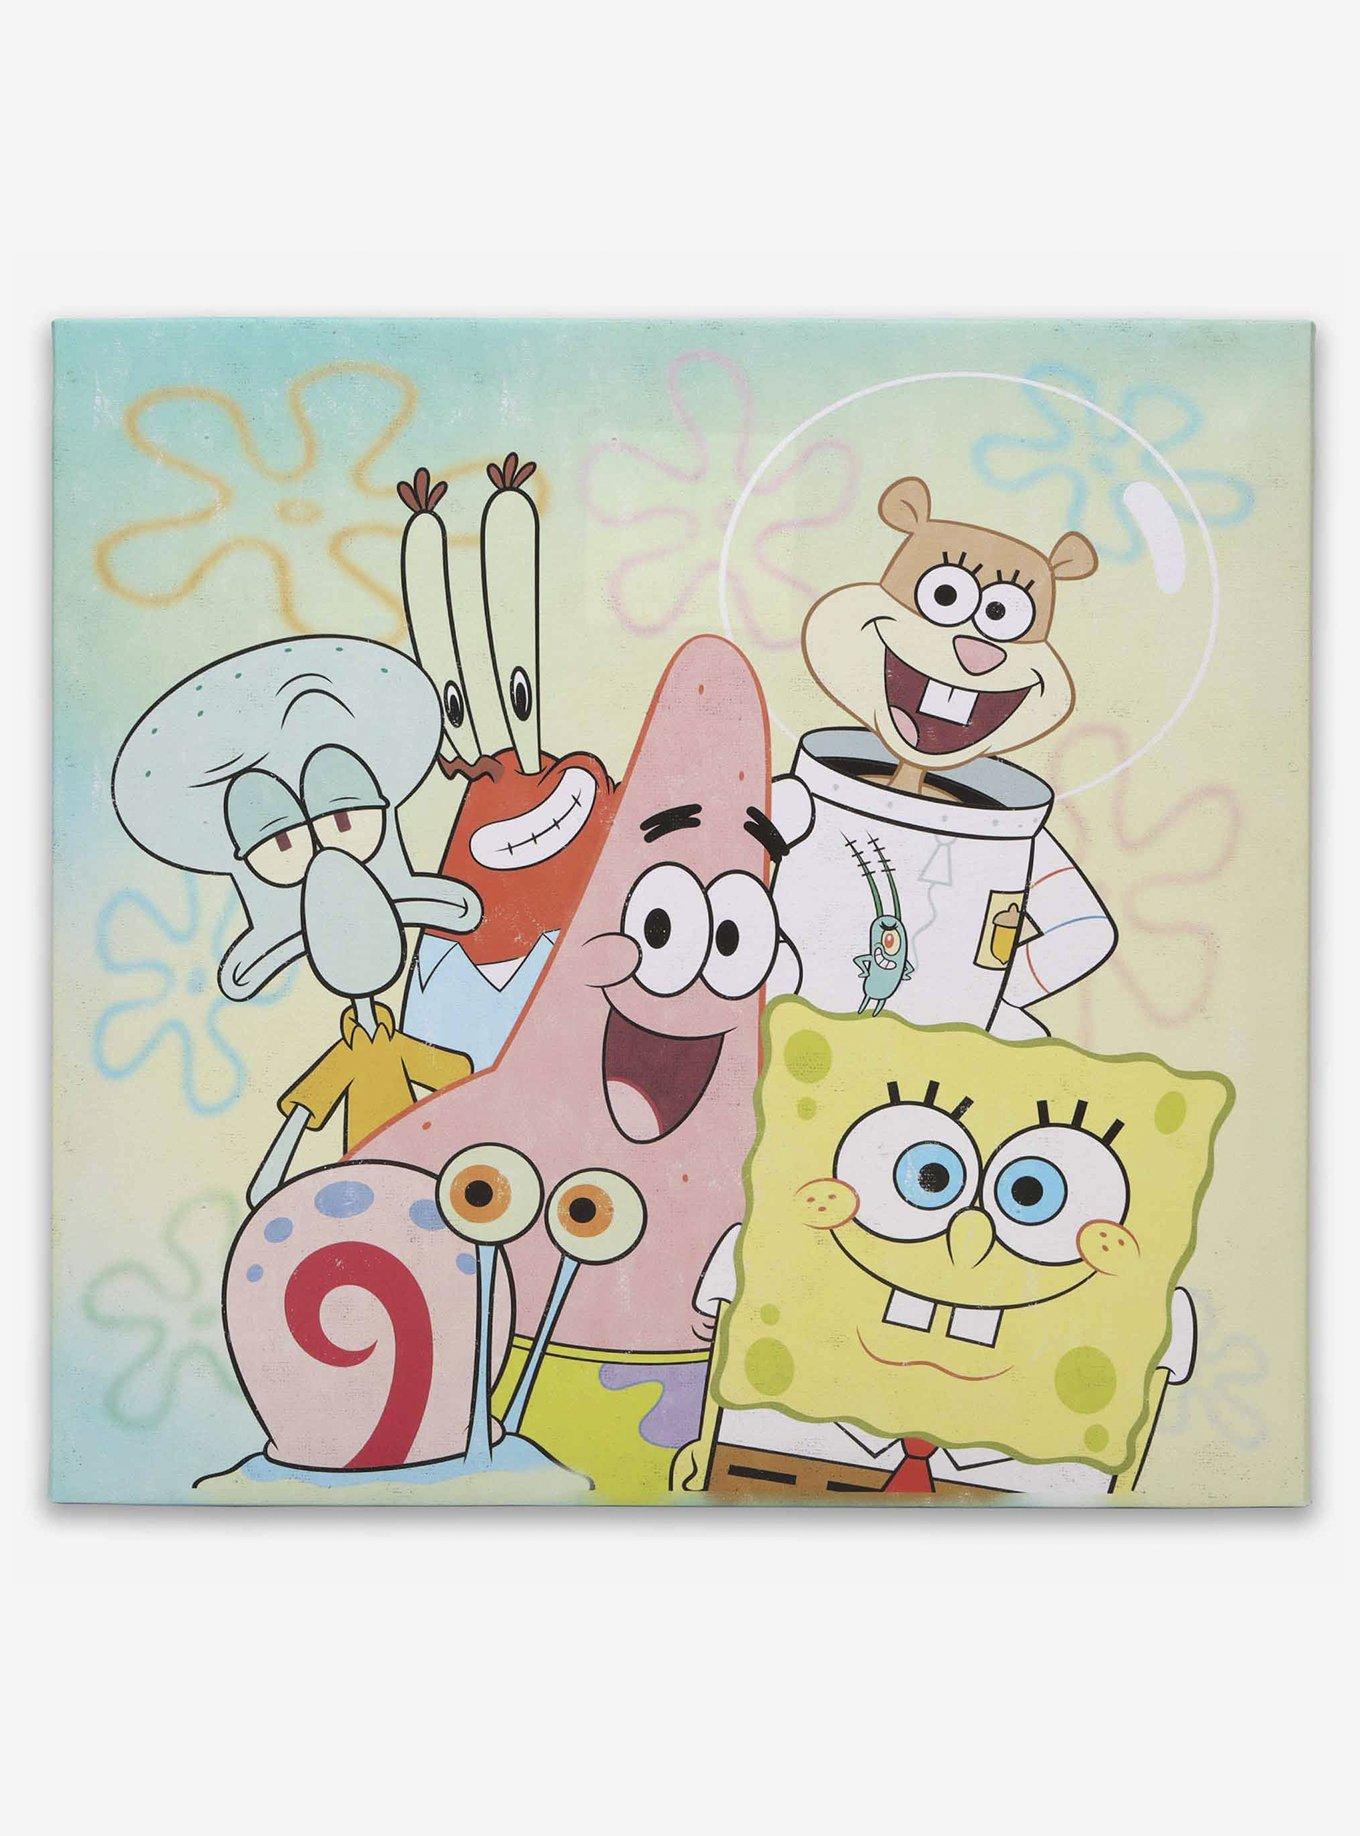 SpongeBob SquarePants & Friends Canvas Wall Decor